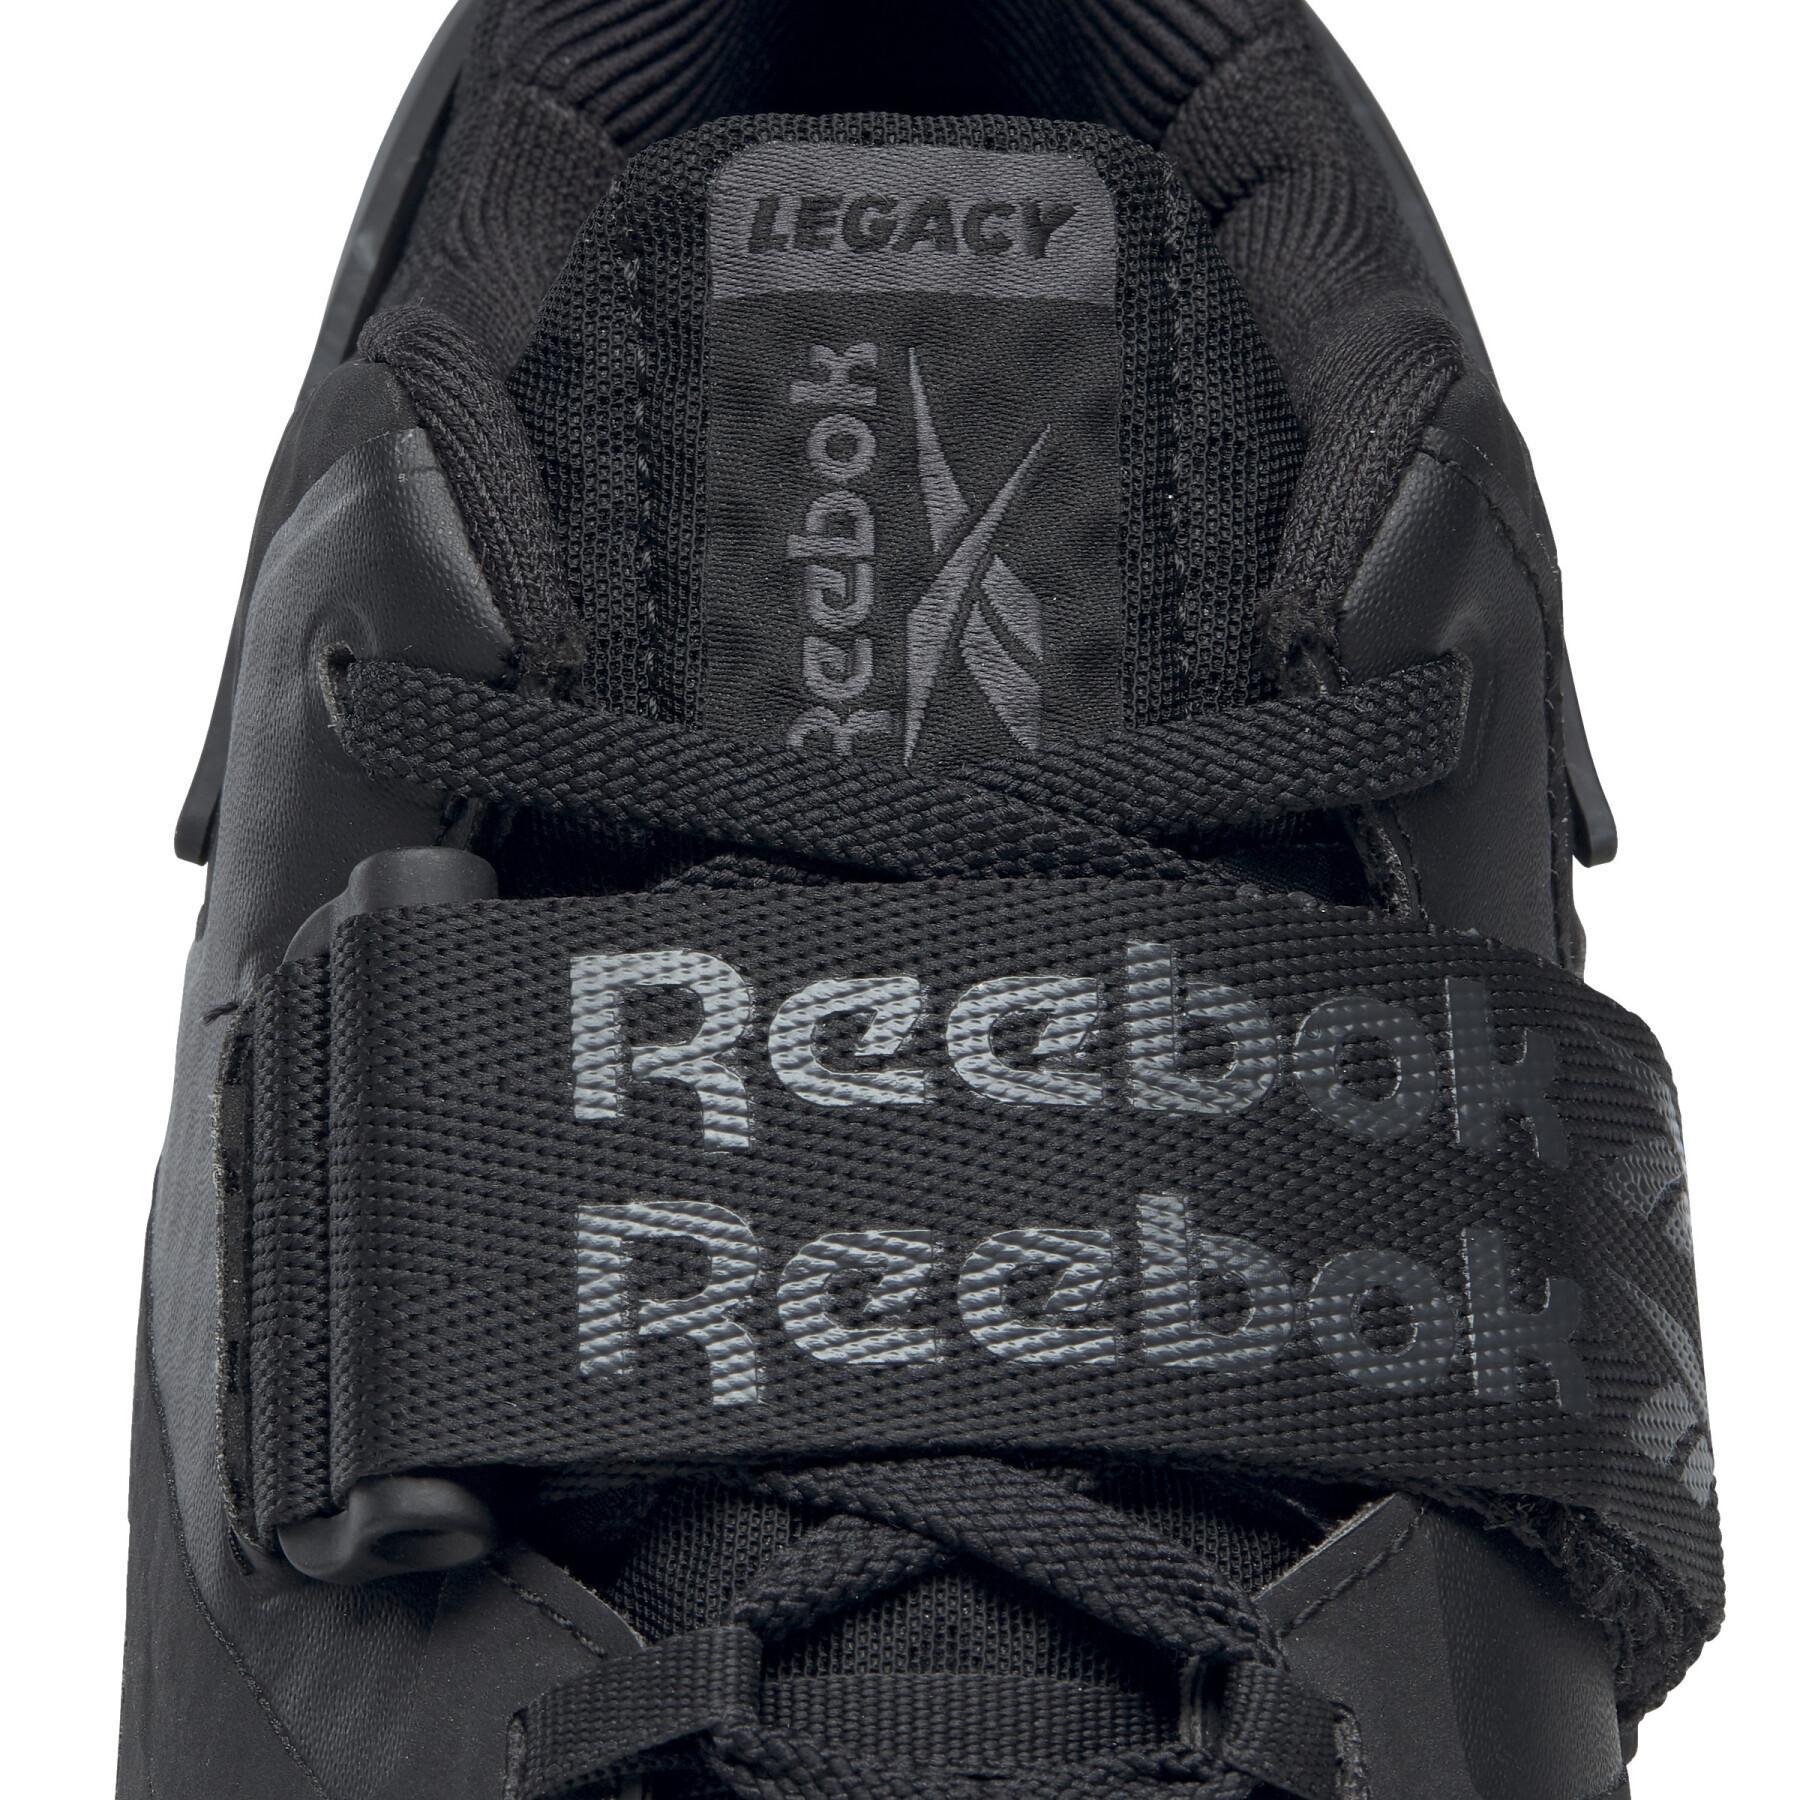 Chaussures Reebok Legacy Lifter Ii